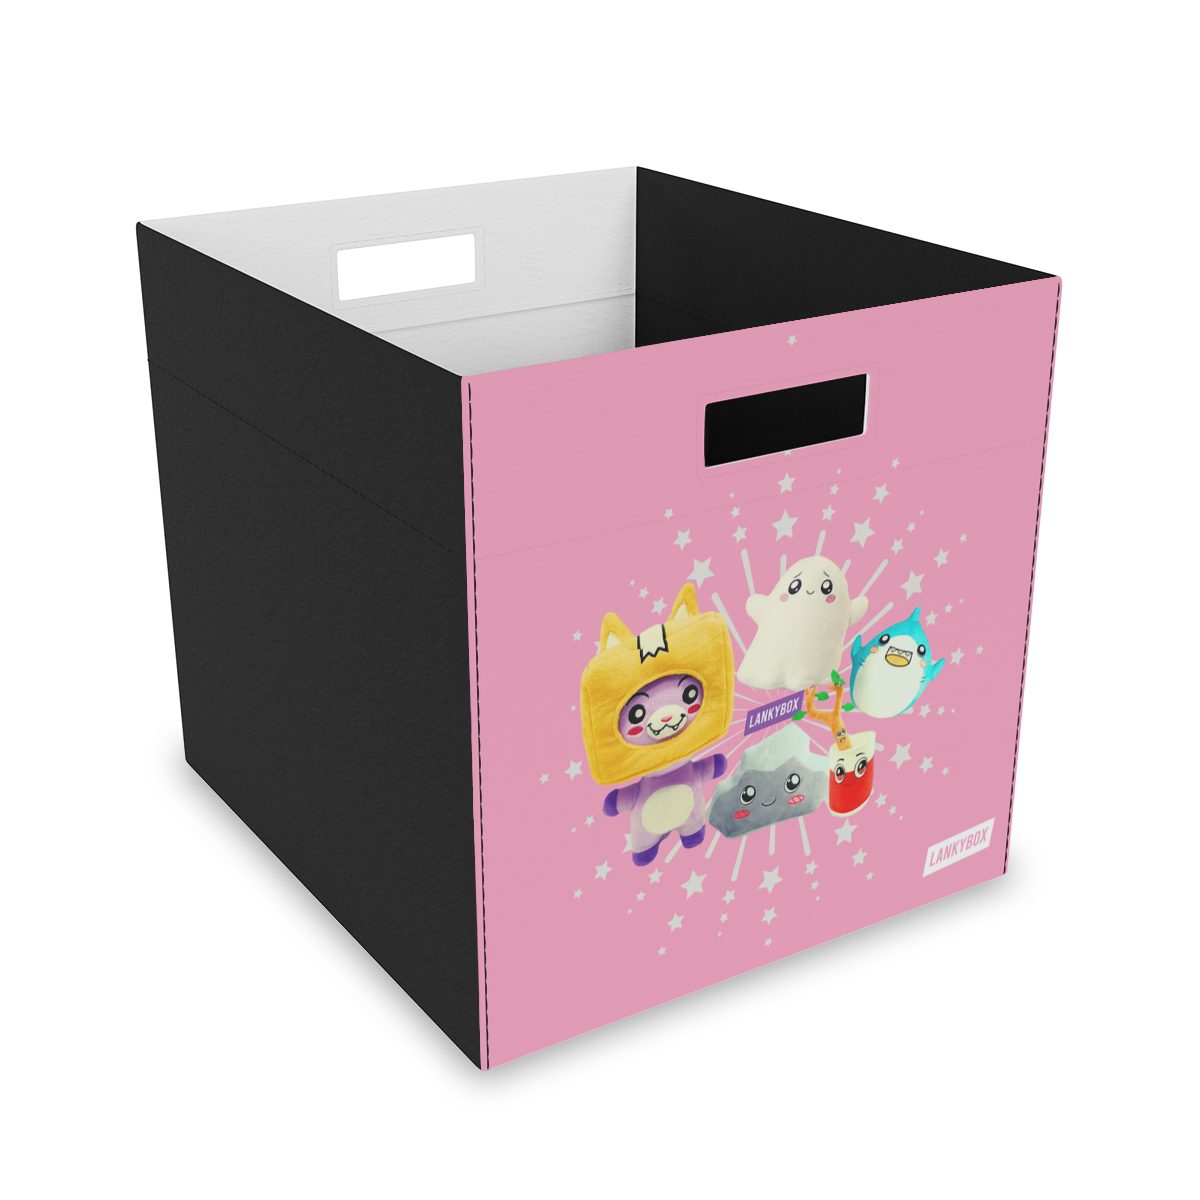 Lanky Box Cute Characters Double Sided Print Felt Storage Box Cool Kiddo 14